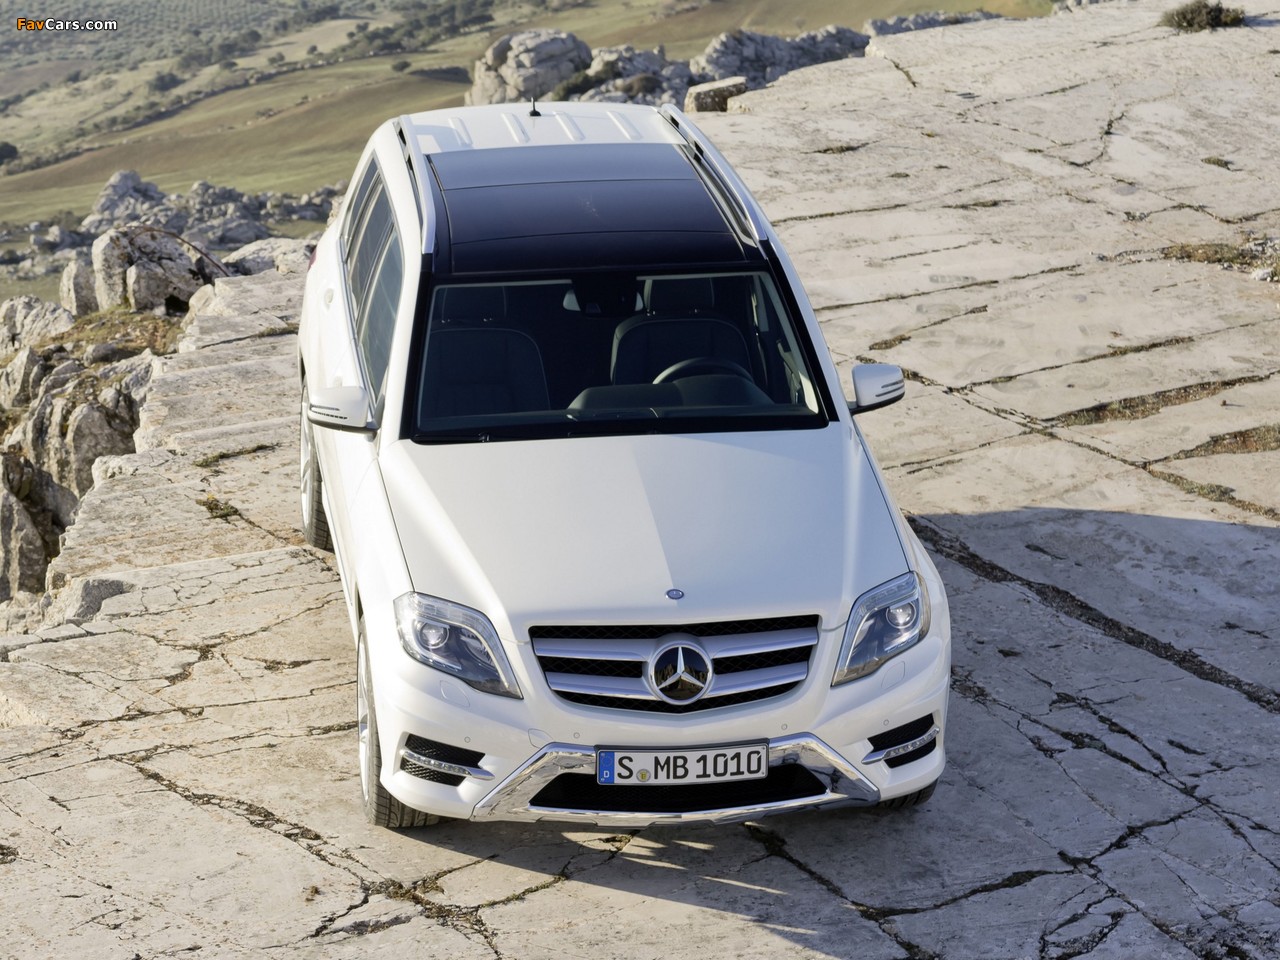 Mercedes-Benz GLK 350 BlueEfficiency (X204) 2012 images (1280 x 960)